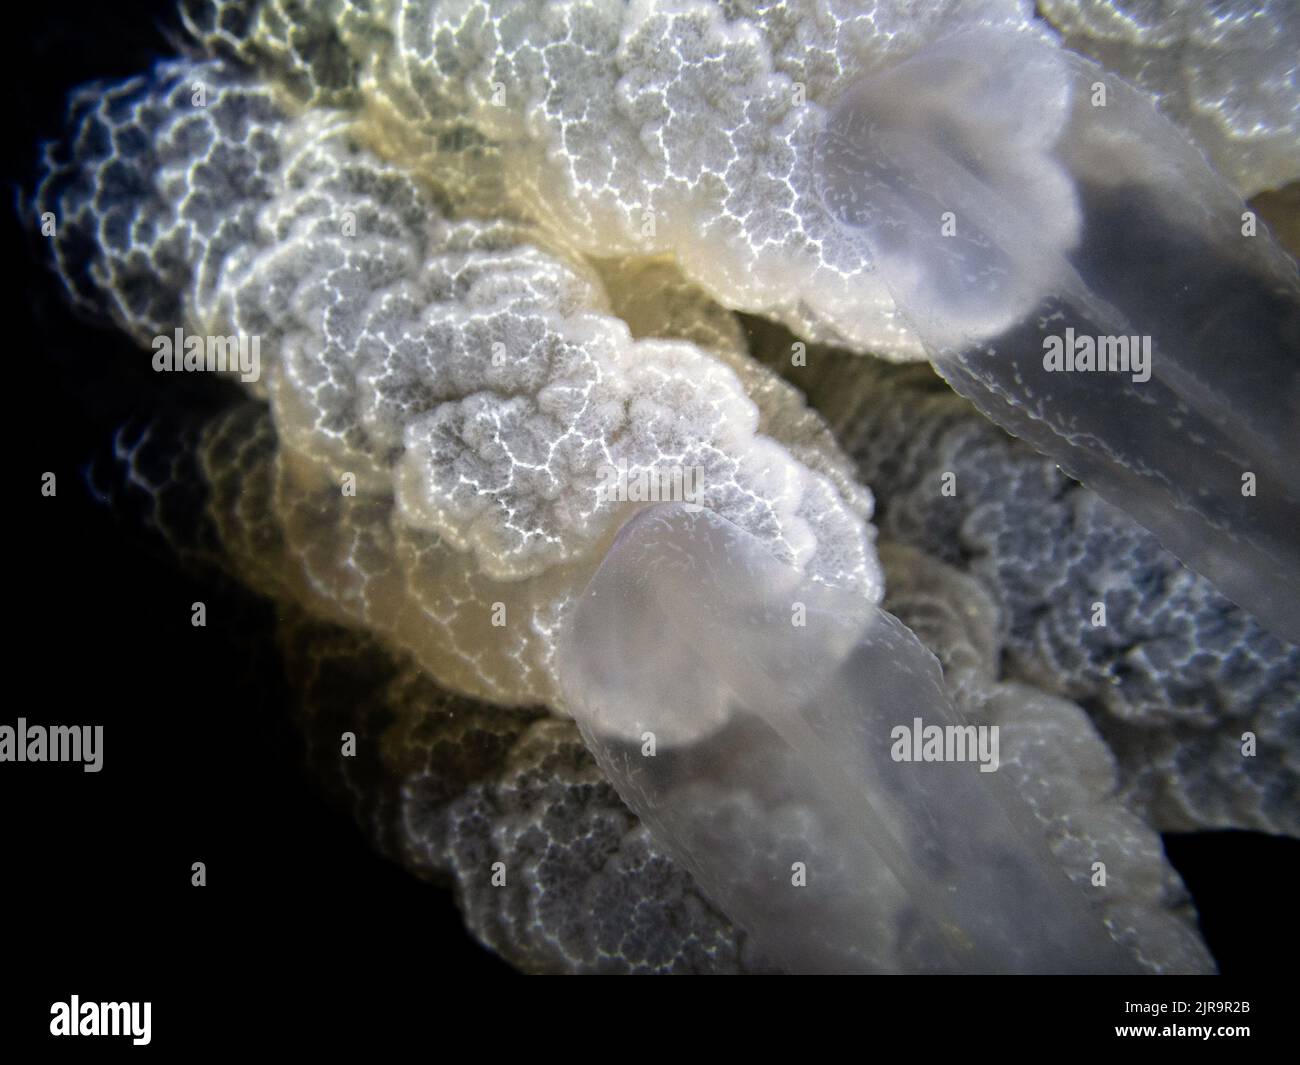 Barrel jellyfish (Rhizostoma pulmo) on the black background, night dive in Mediterranean sea Stock Photo